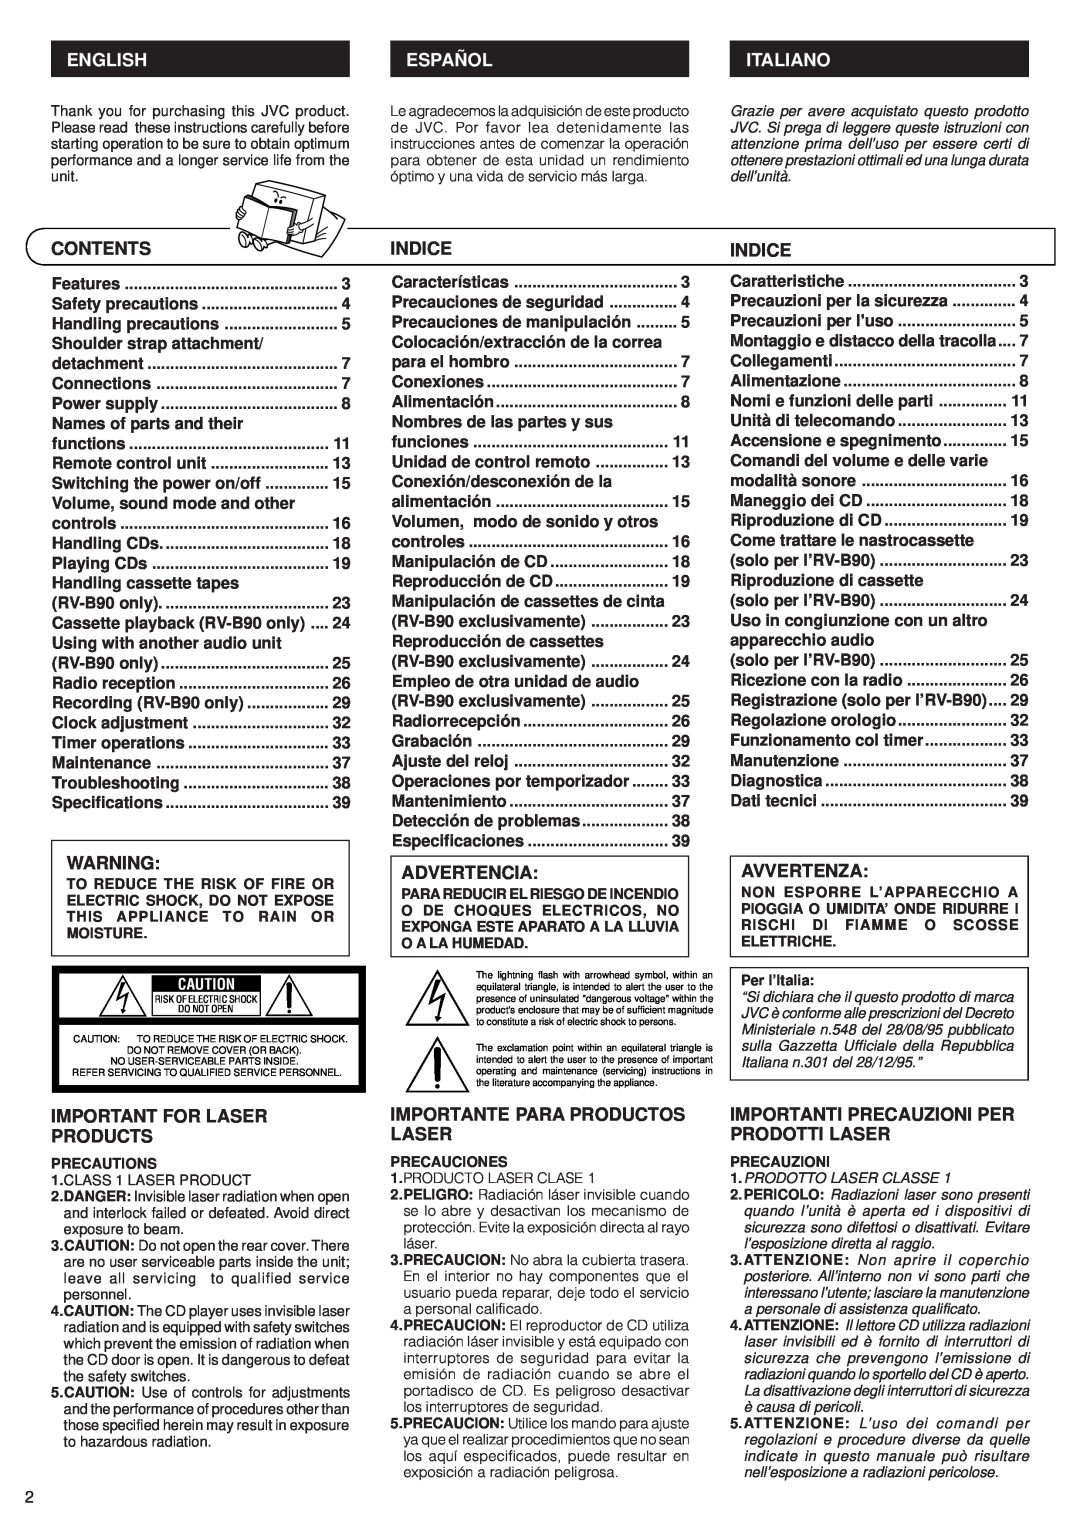 JVC RV-B70 manual Contents, Indice, Advertencia, Avvertenza, Important For Laser Products, Importante Para Productos Laser 